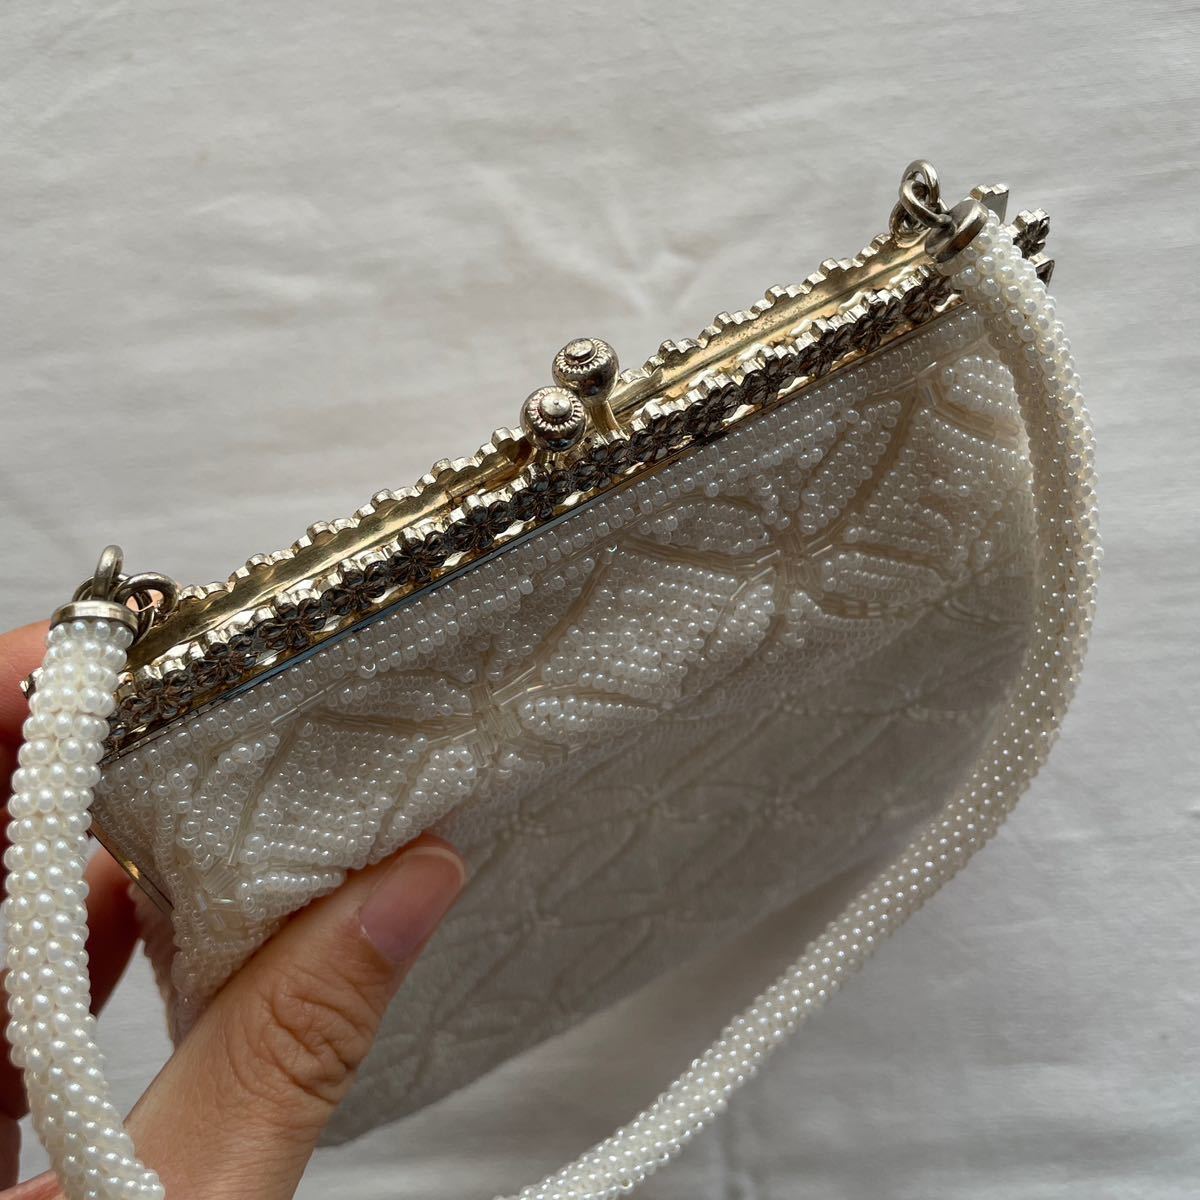  beads bag white the 7 treasures pattern floral print silver bulrush . Showa era made in Japan Japanese beads, vintage purse handbag